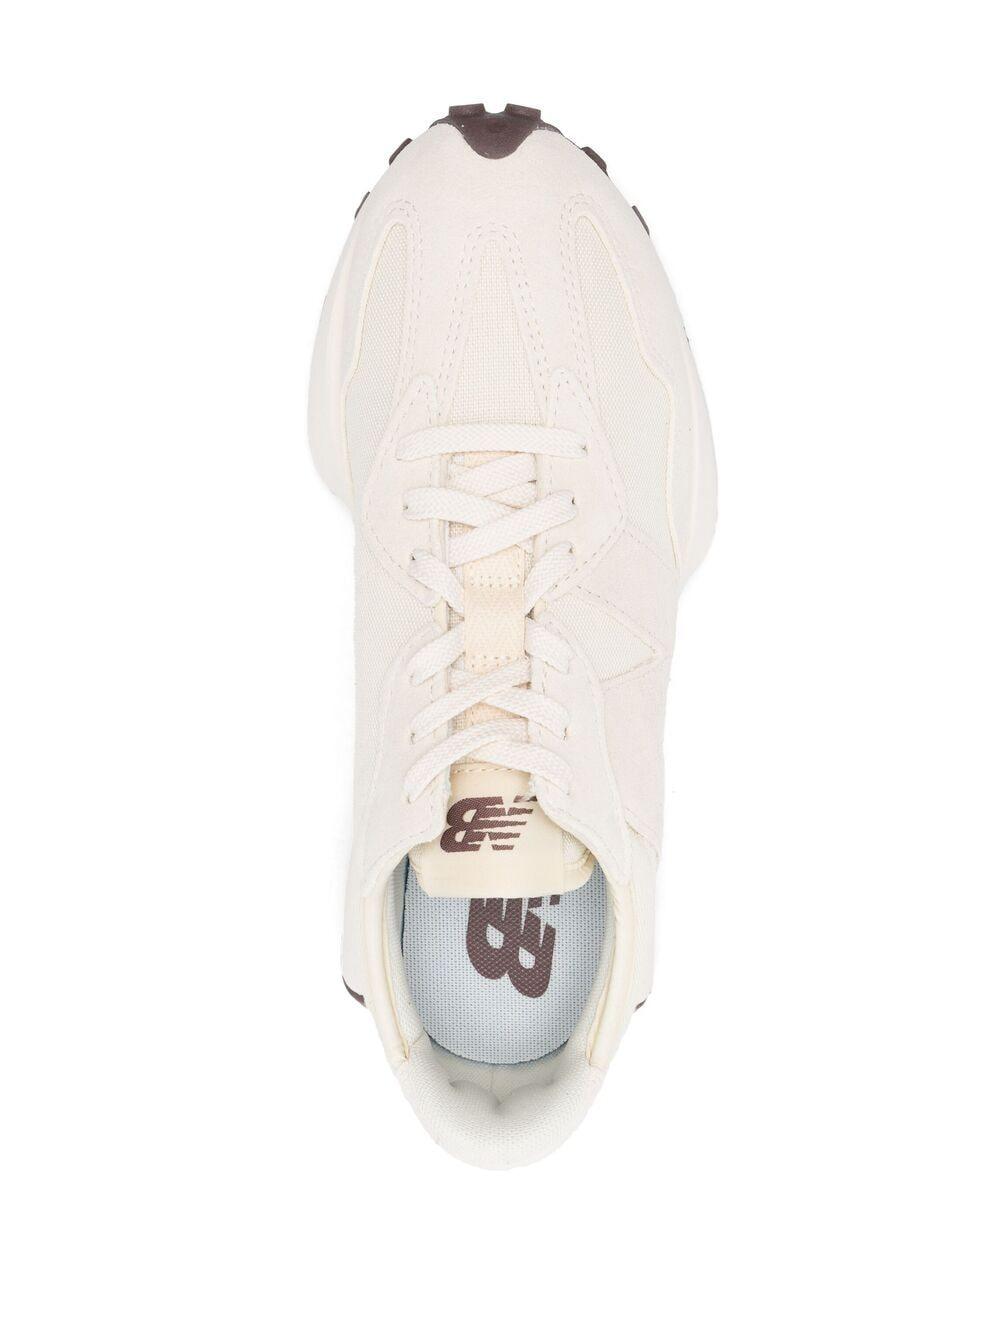 New Balance Leder Sneakers 327 in Weiß Damen Herren Schuhe 